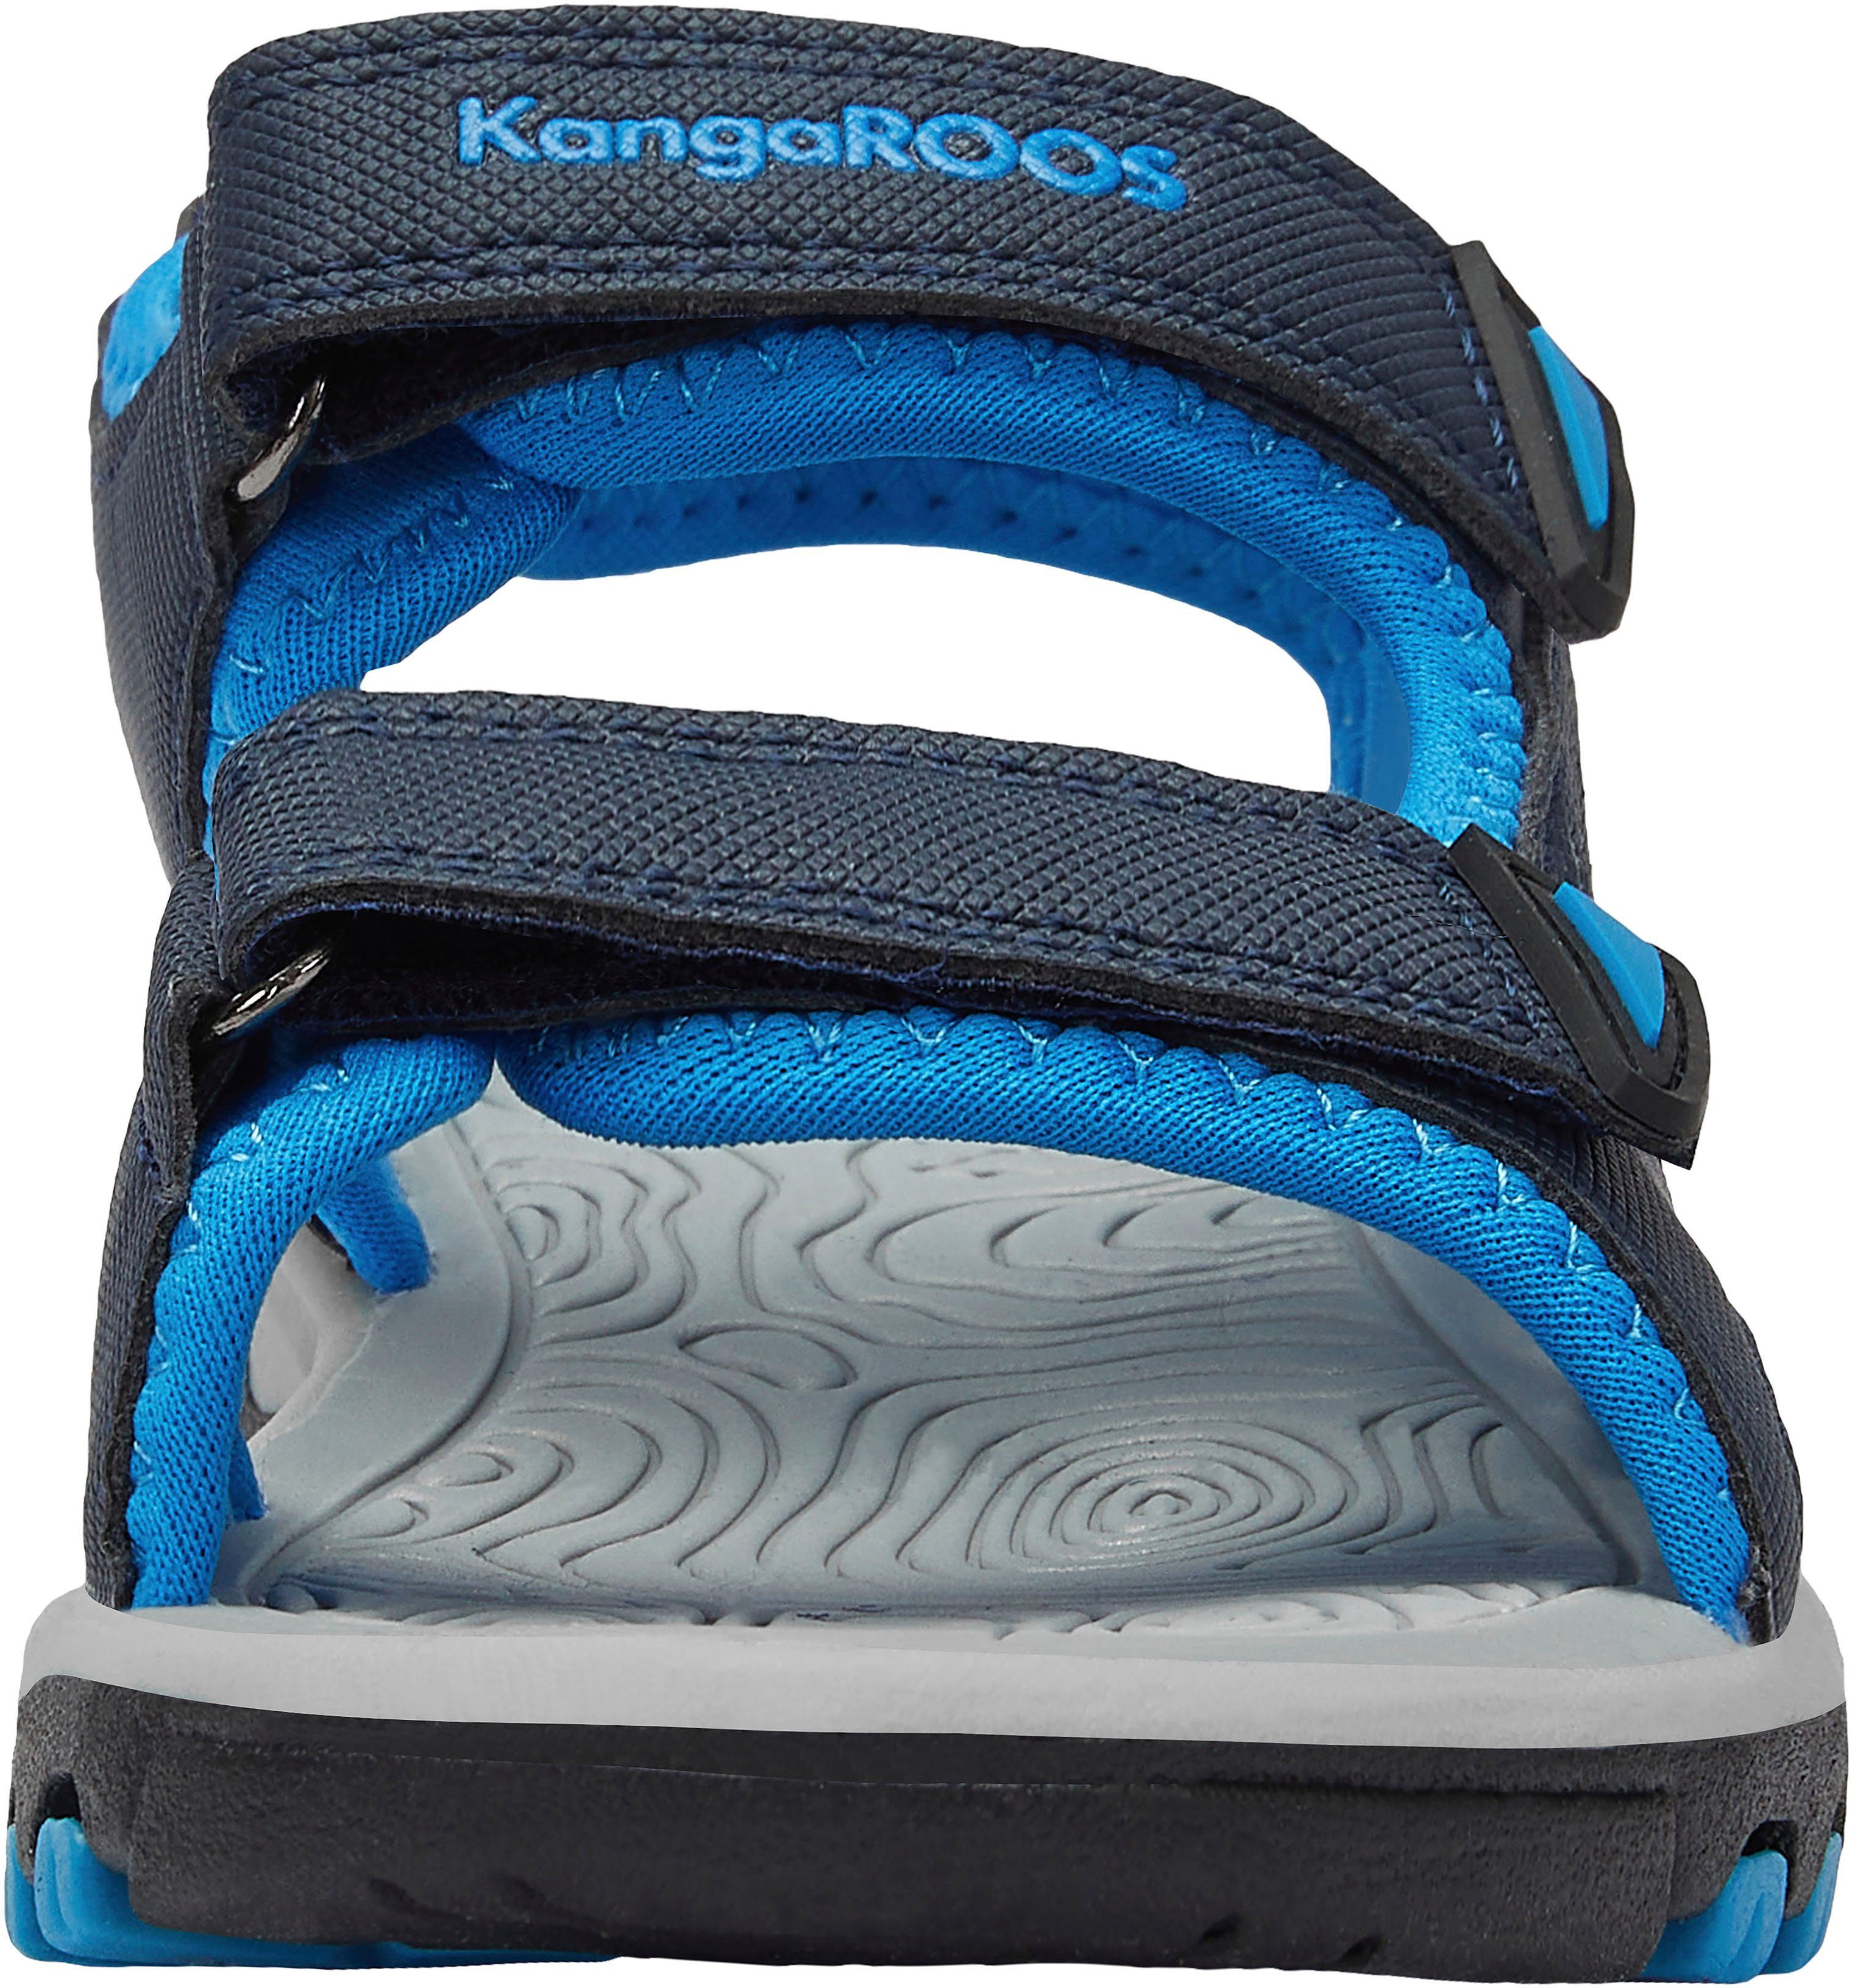 KangaROOS K-Celtic Barbo Sandale blau Klettverschluss mit